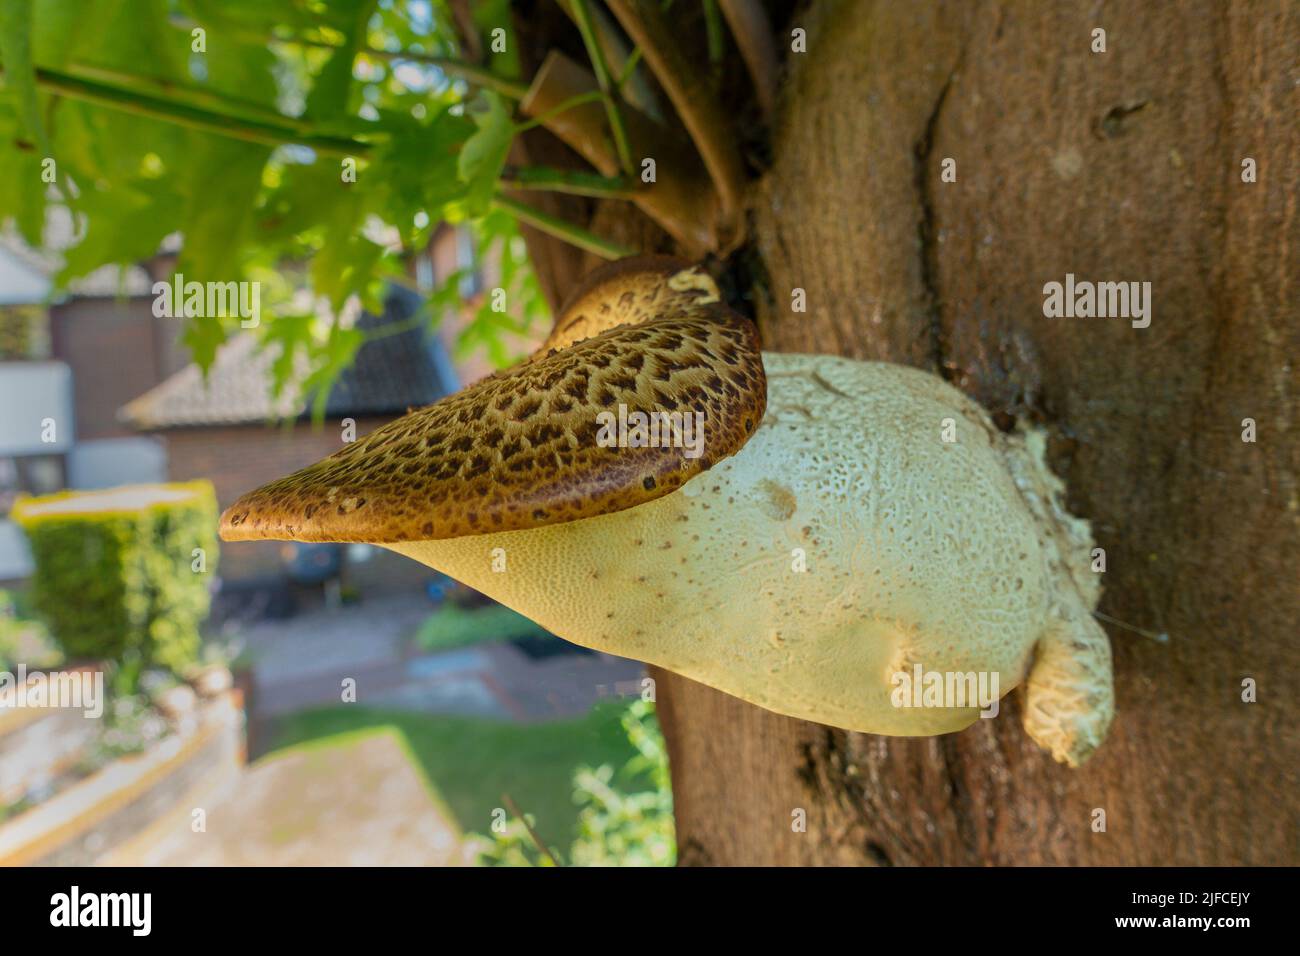 Fungus growing on tree trunk. Stock Photo